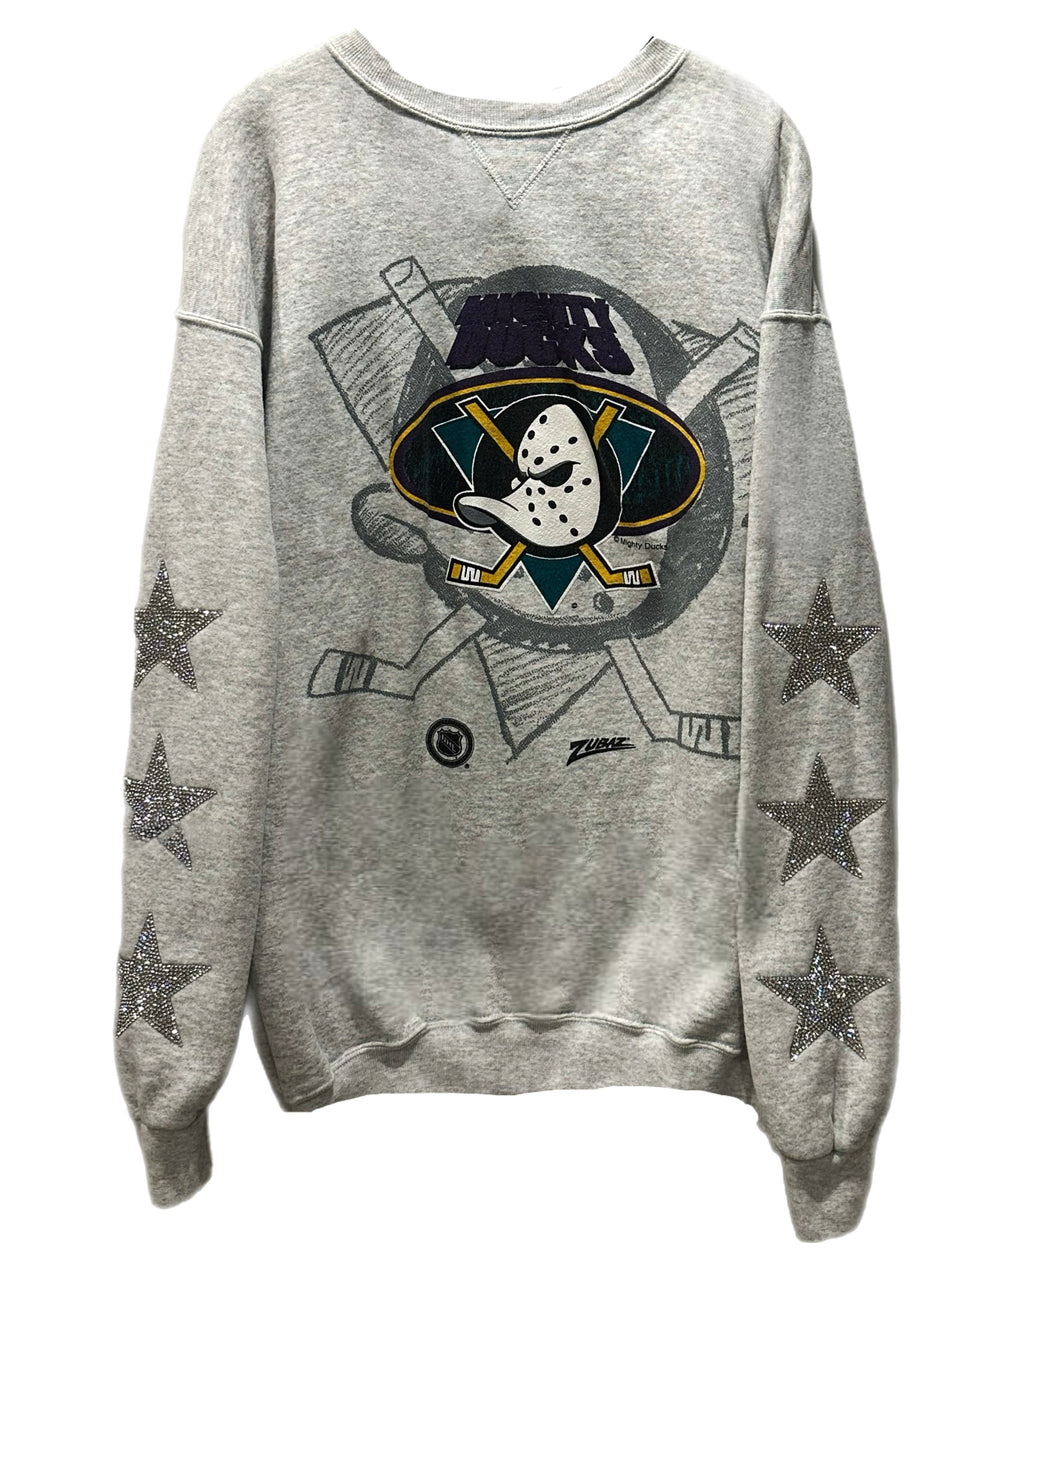 Anaheim Ducks, Hockey One of a KIND Vintage “Mighty Ducks” Sweatshirt with Three Crystal Star Design.